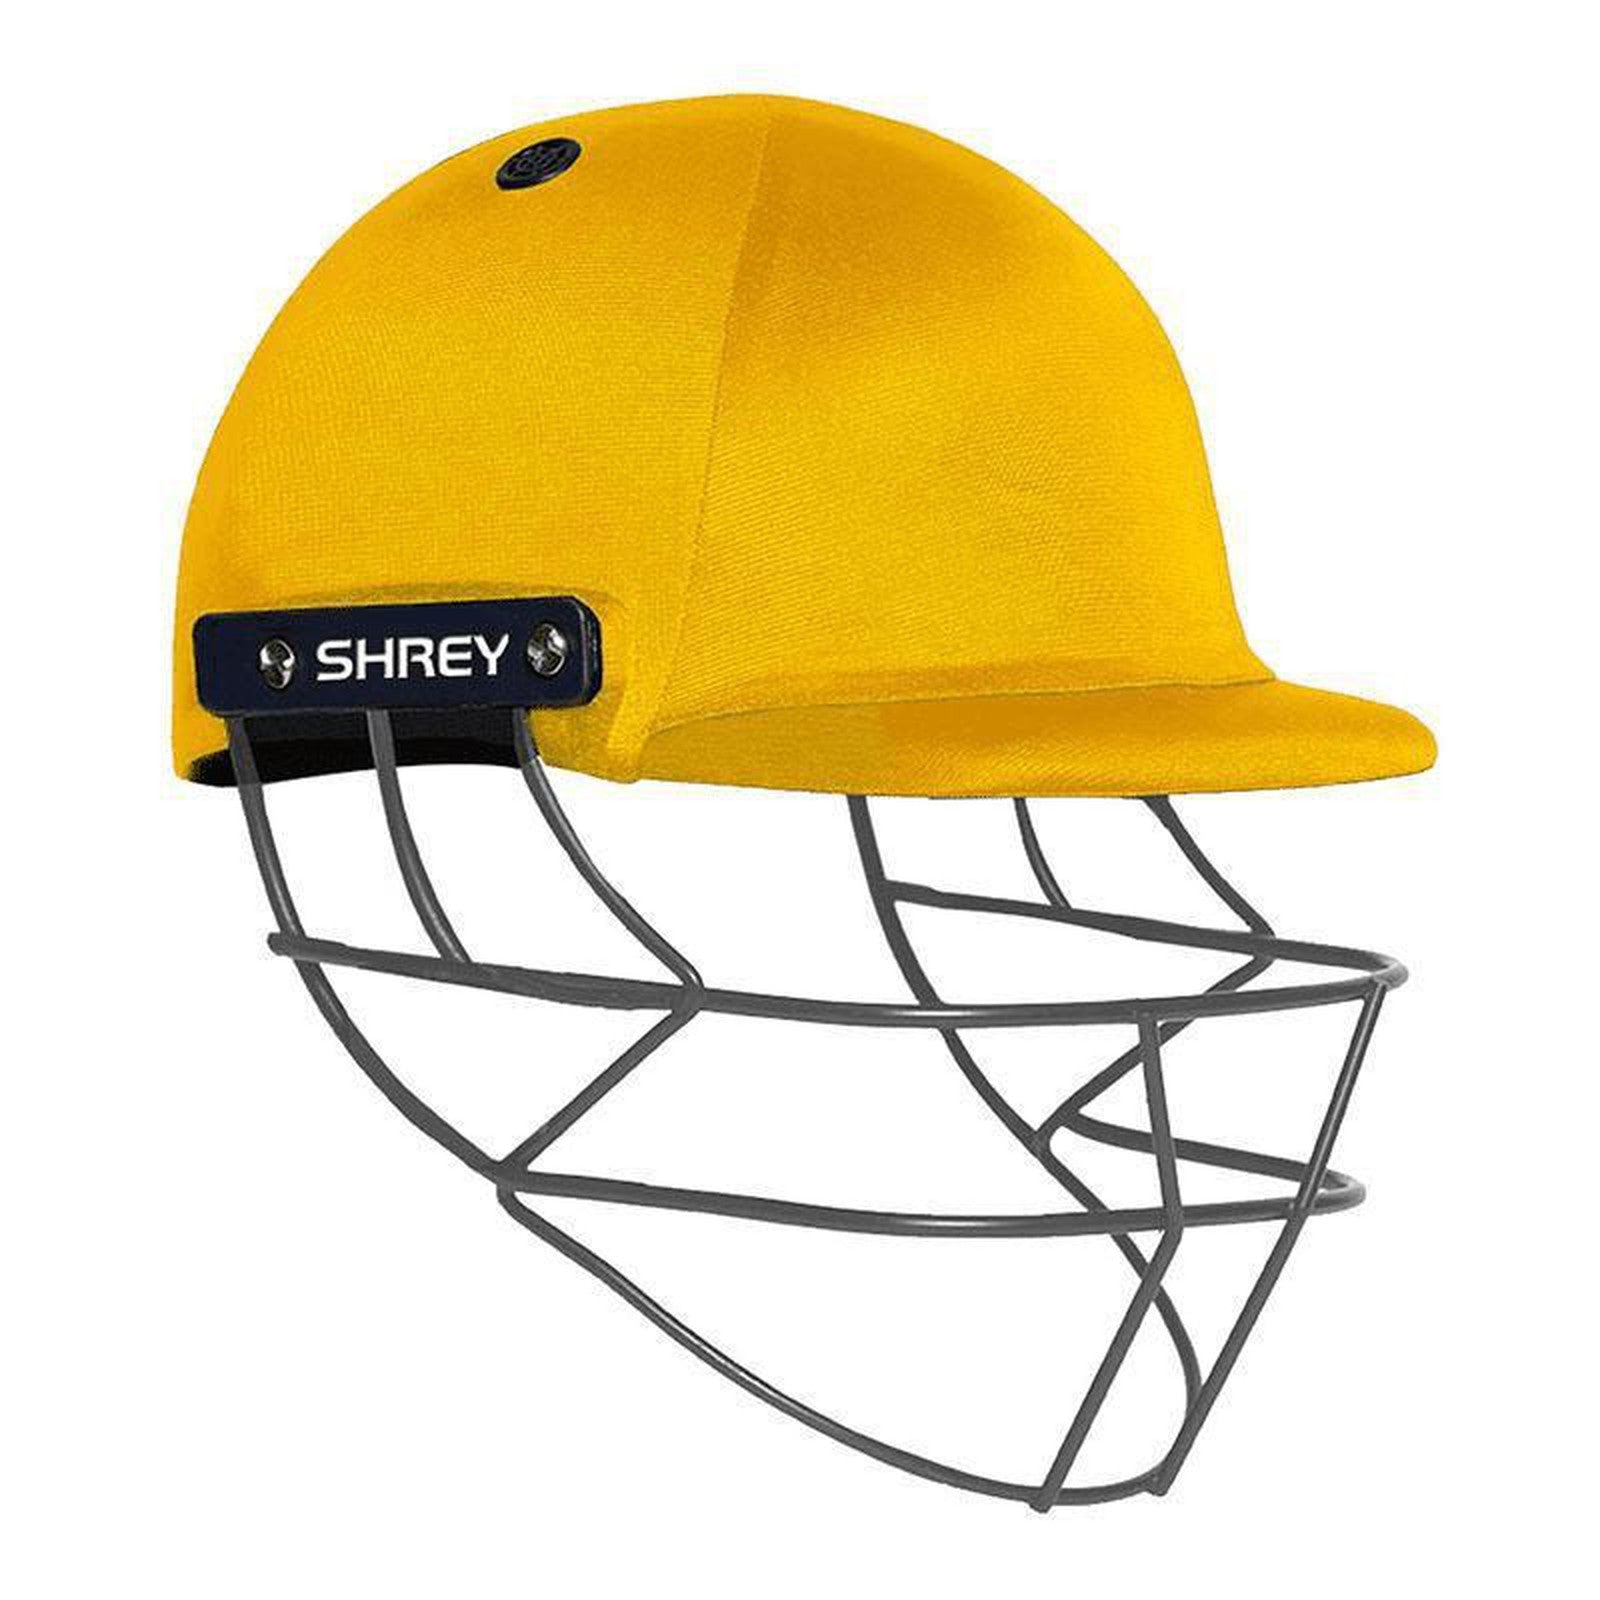 Shrey Performance 2.0 Cricket Helmet With Mild Steel - Yellow Youth